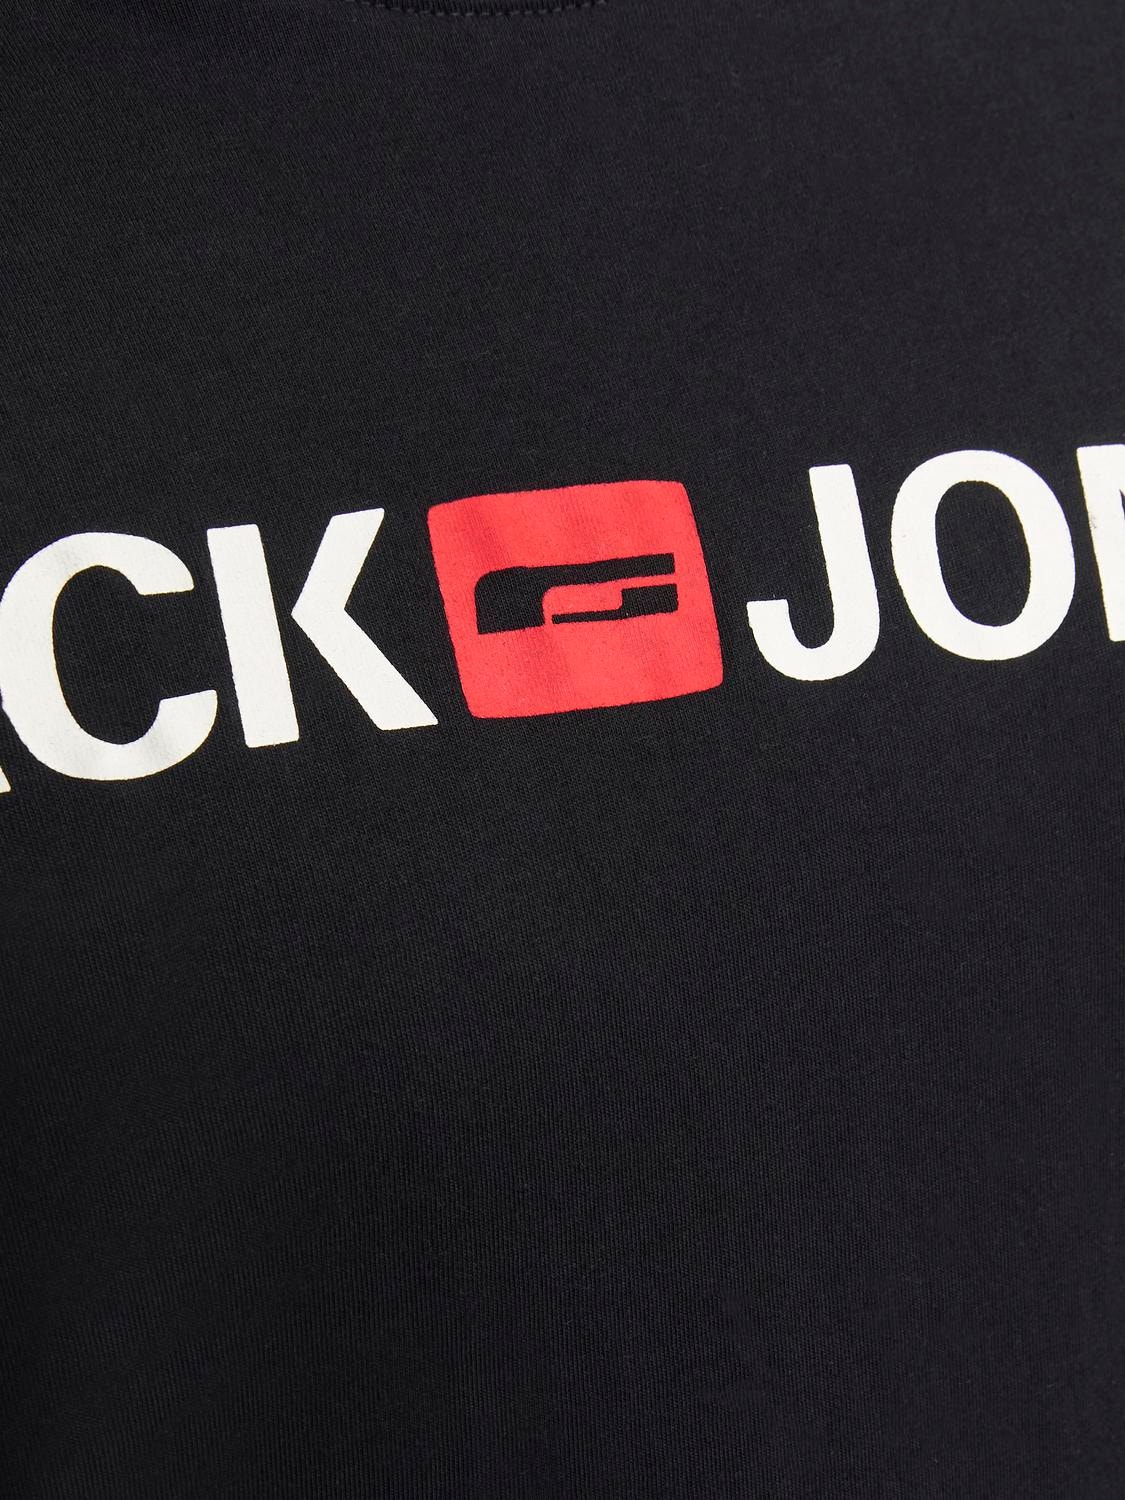 Jack & Jones Plus Size Z logo T-shirt -Black - 12184987